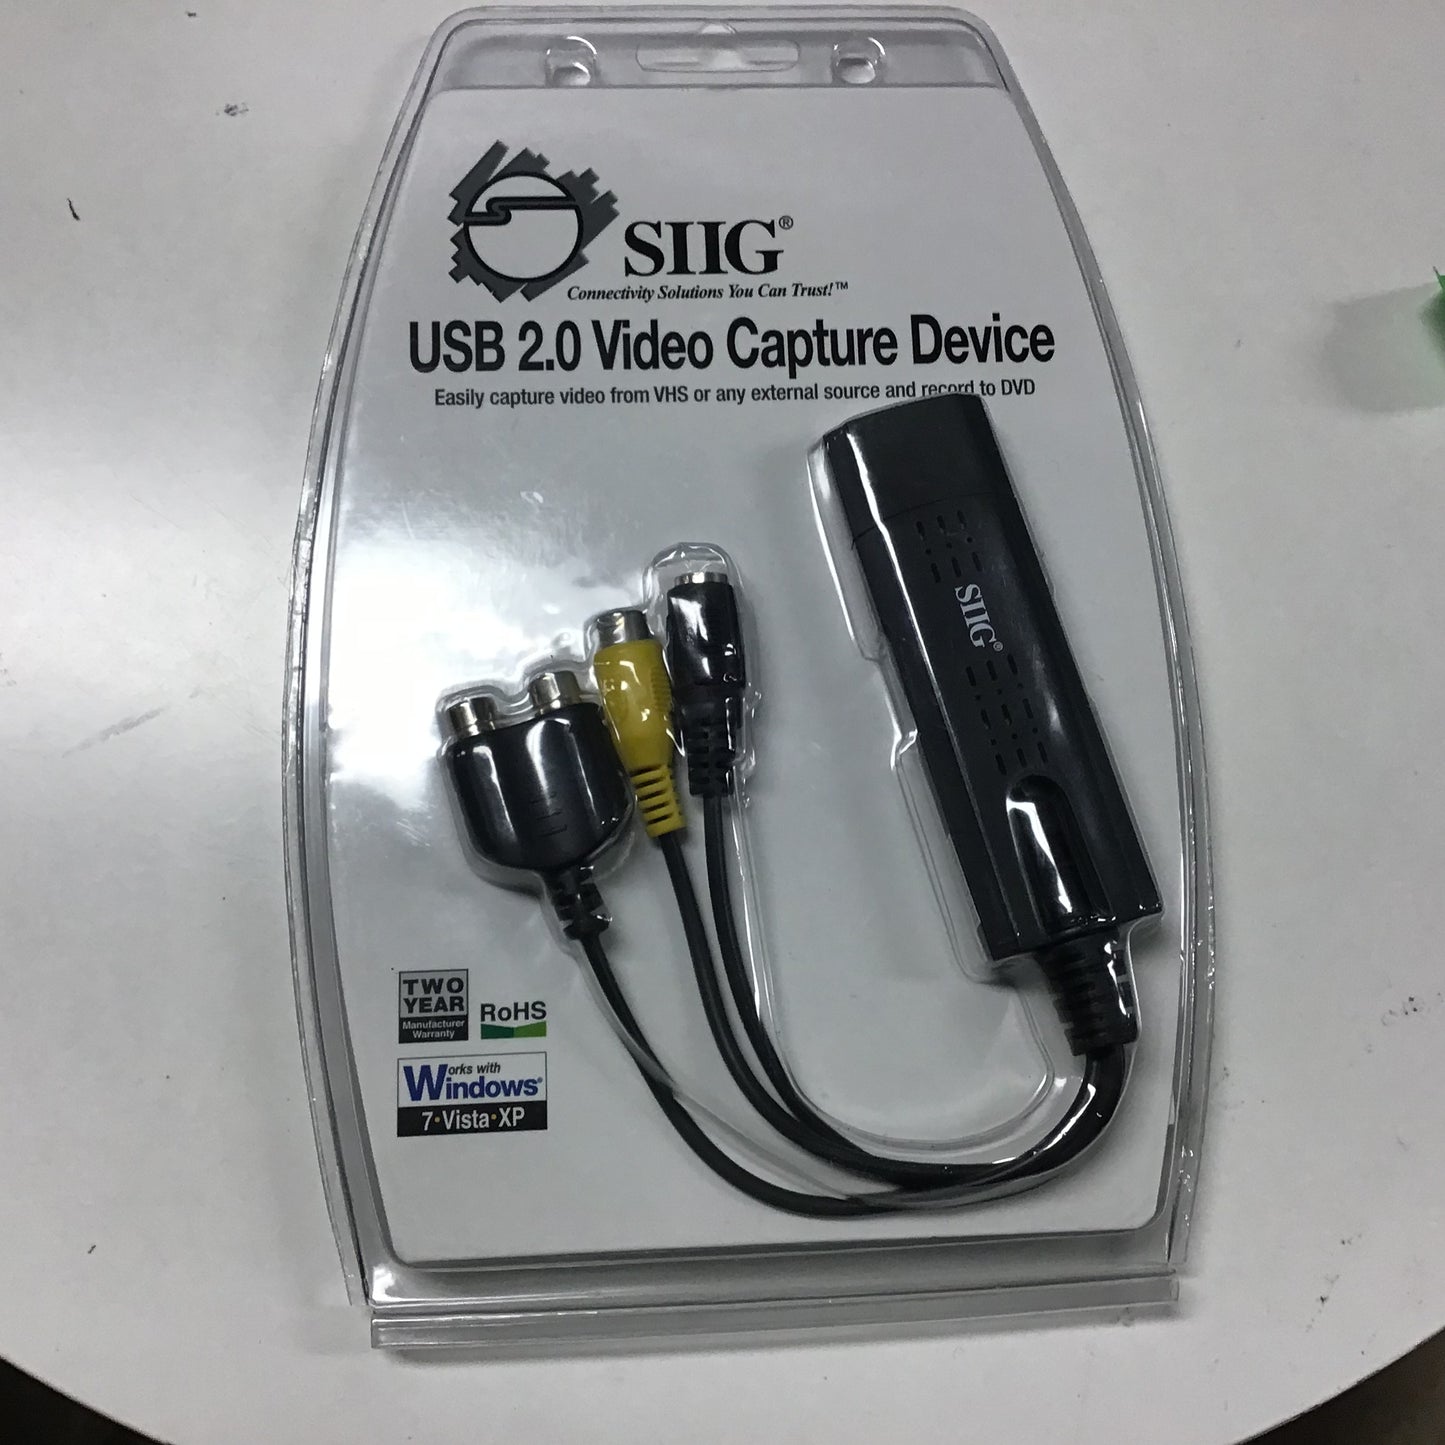 SIIG USB 2.0 Video Capture Device